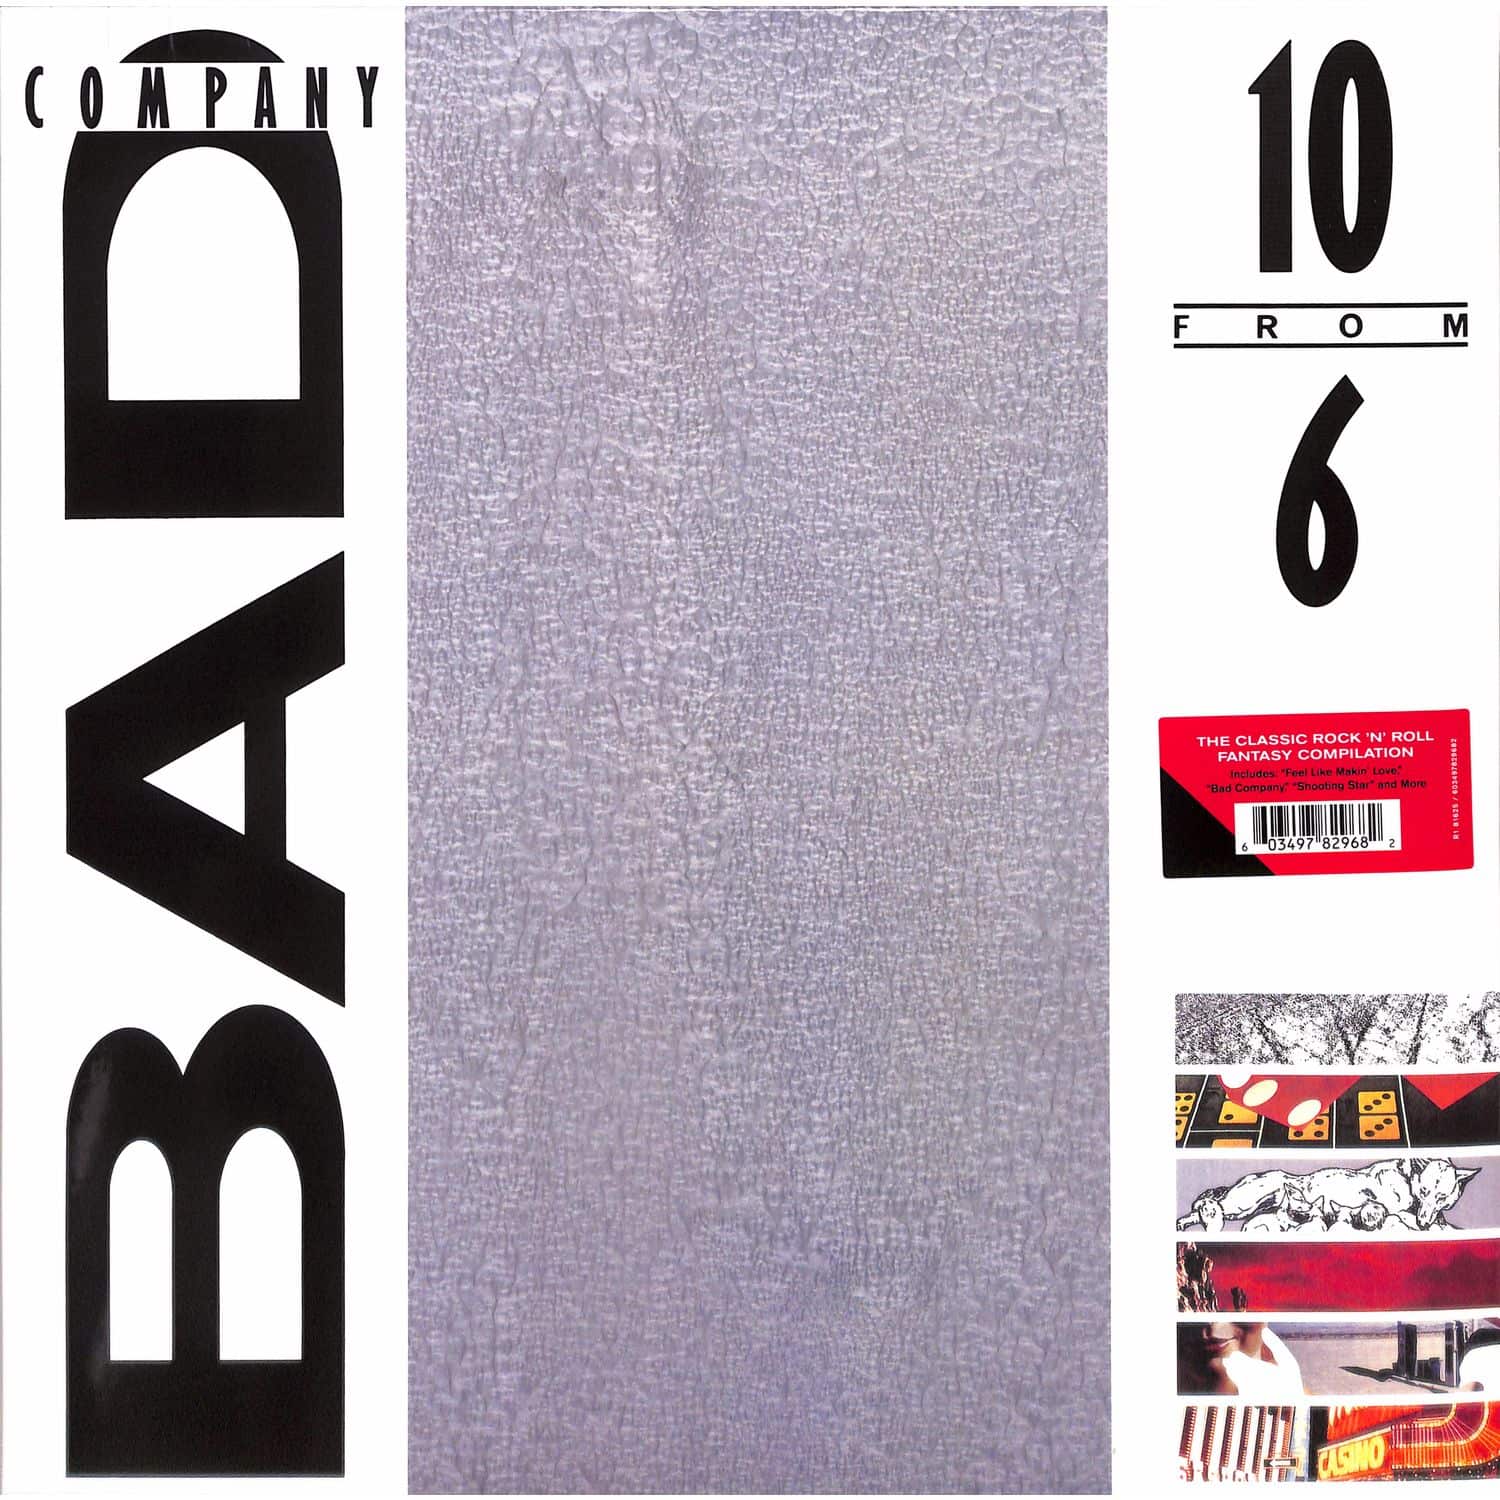 Bad Company - 10 FROM 6 